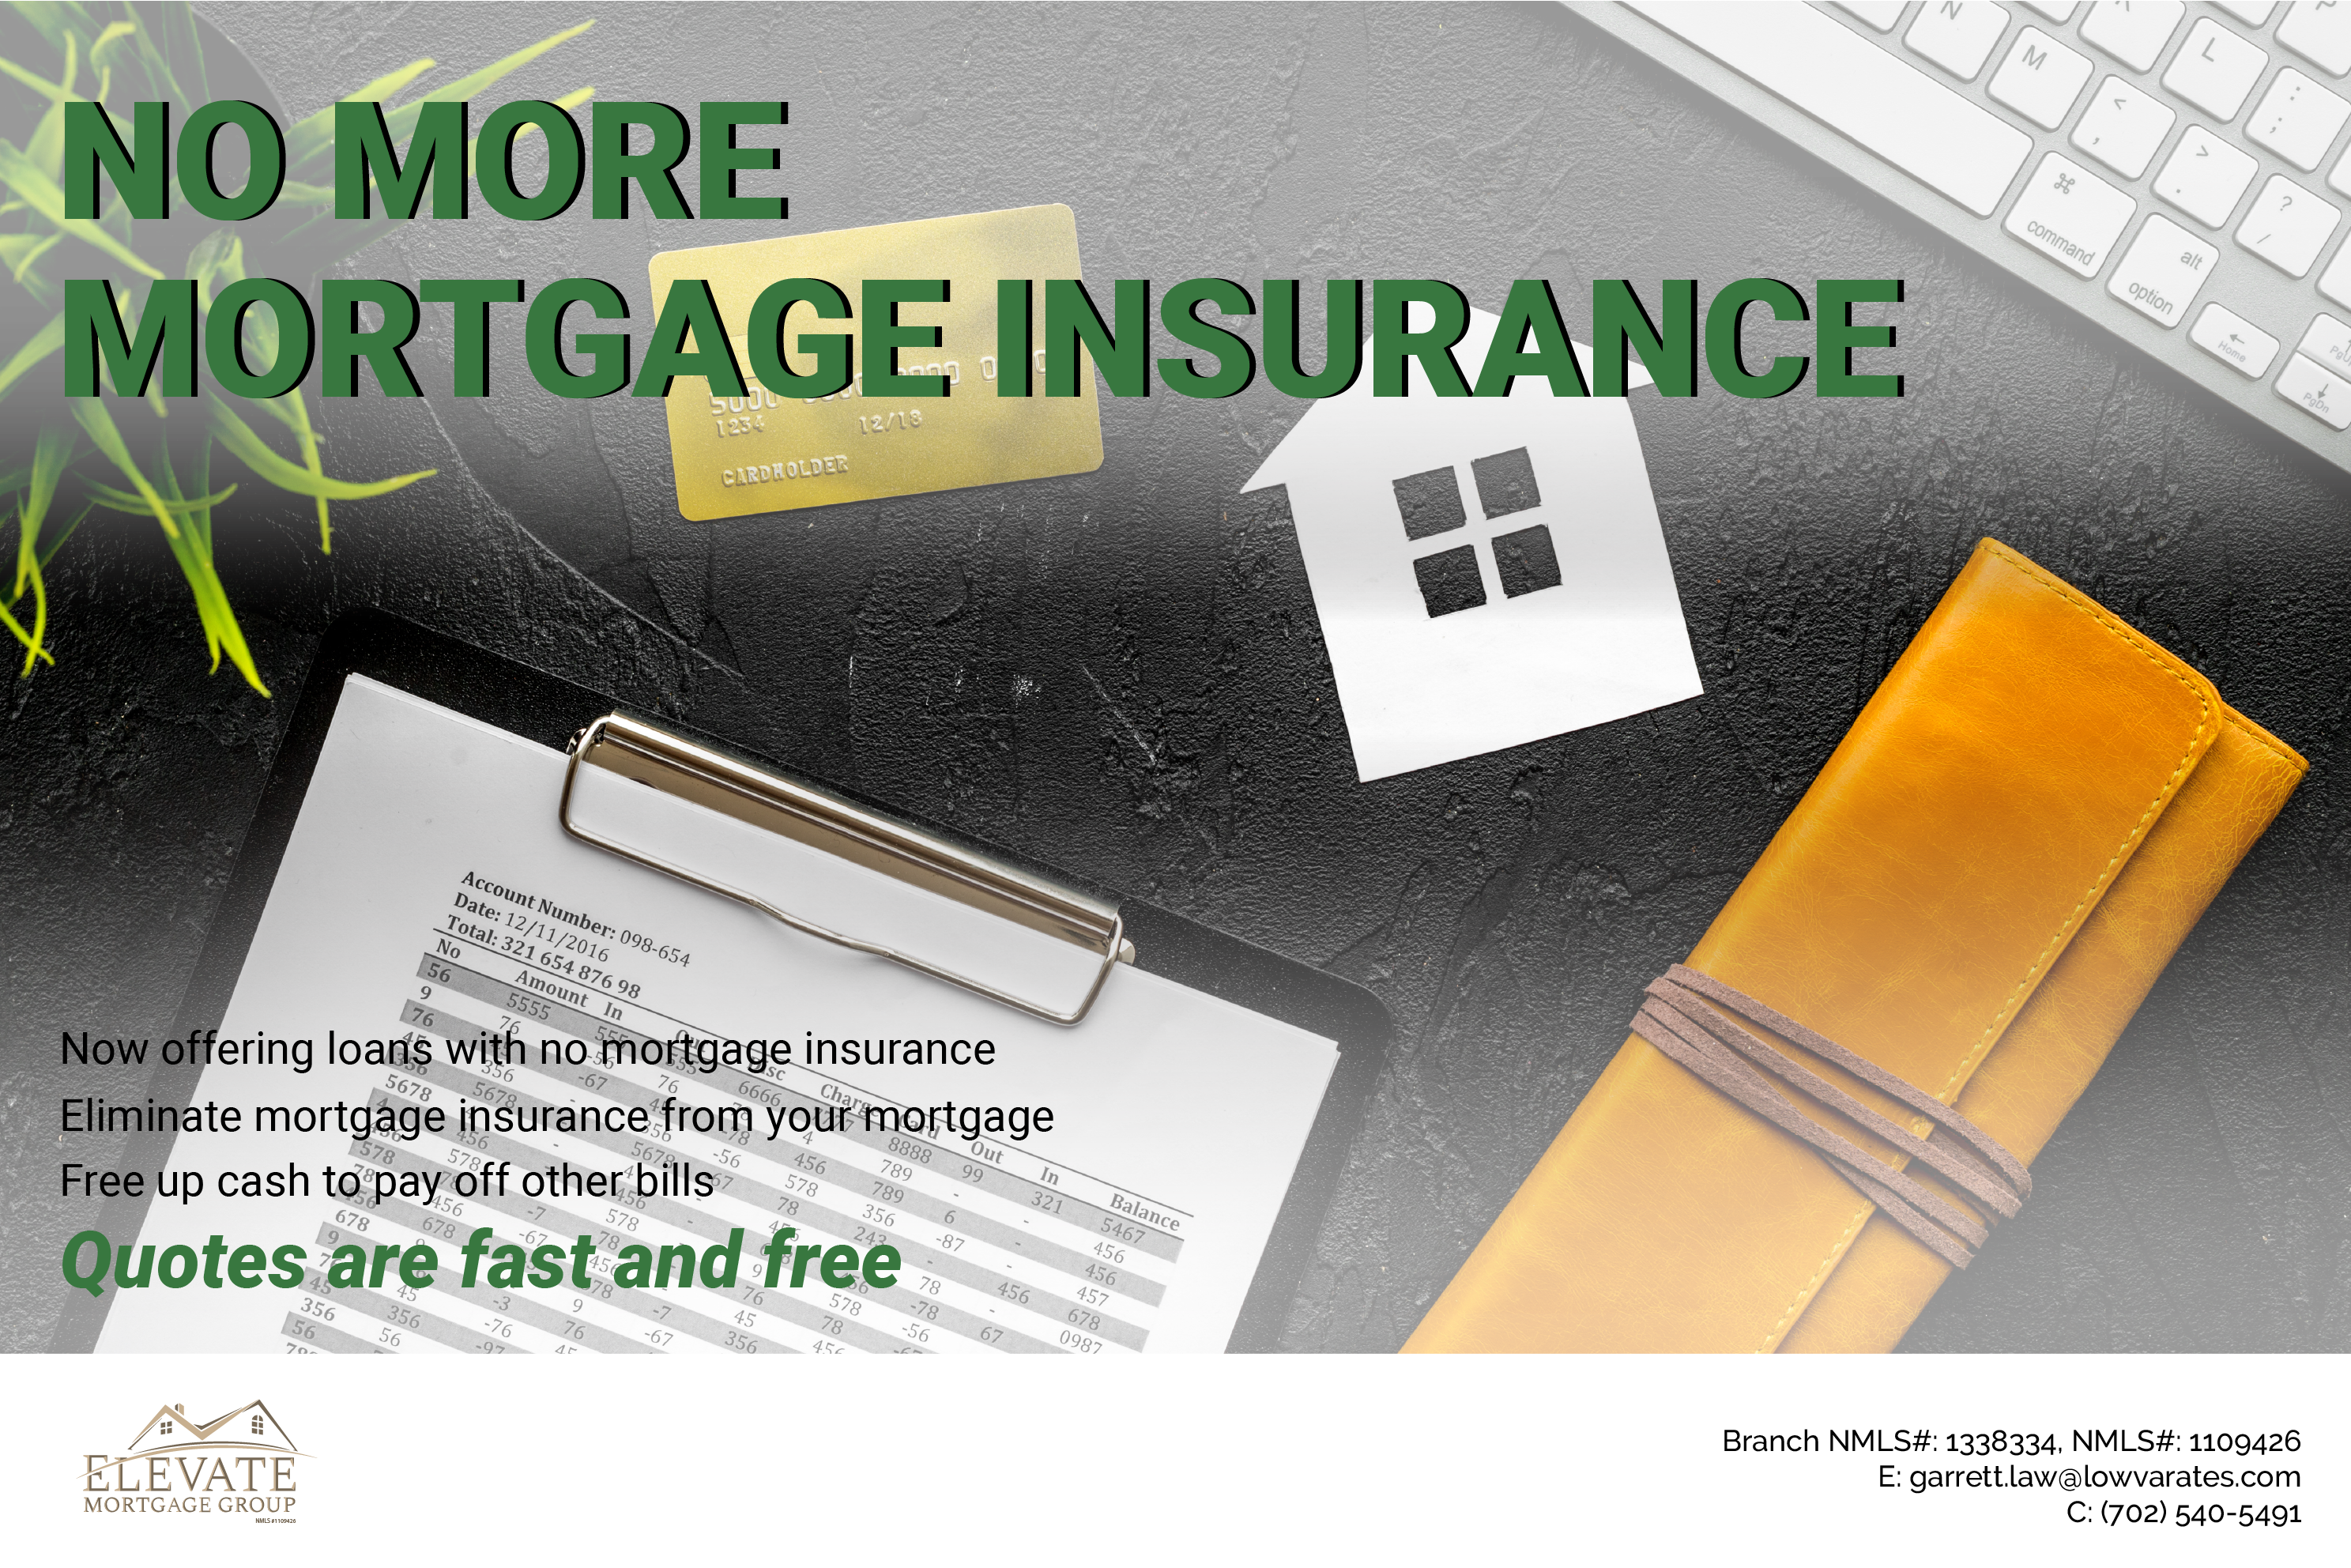 no_more_mortgage_insurance_marketing-01.png (7.66 MB)